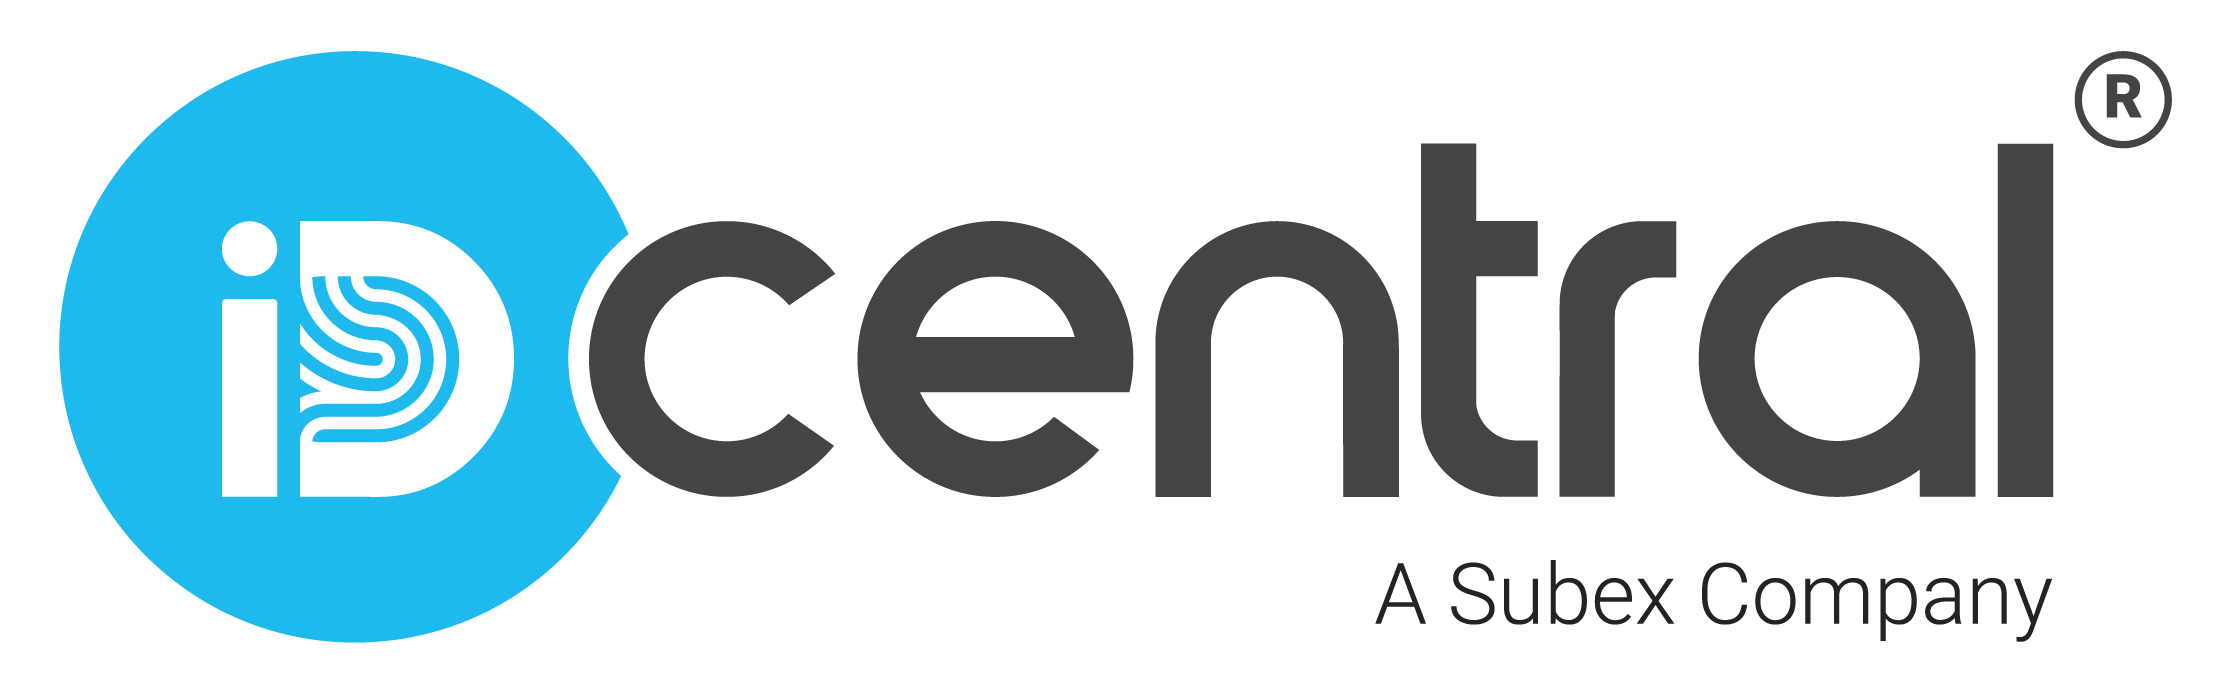 ID Central - Subex Ltd